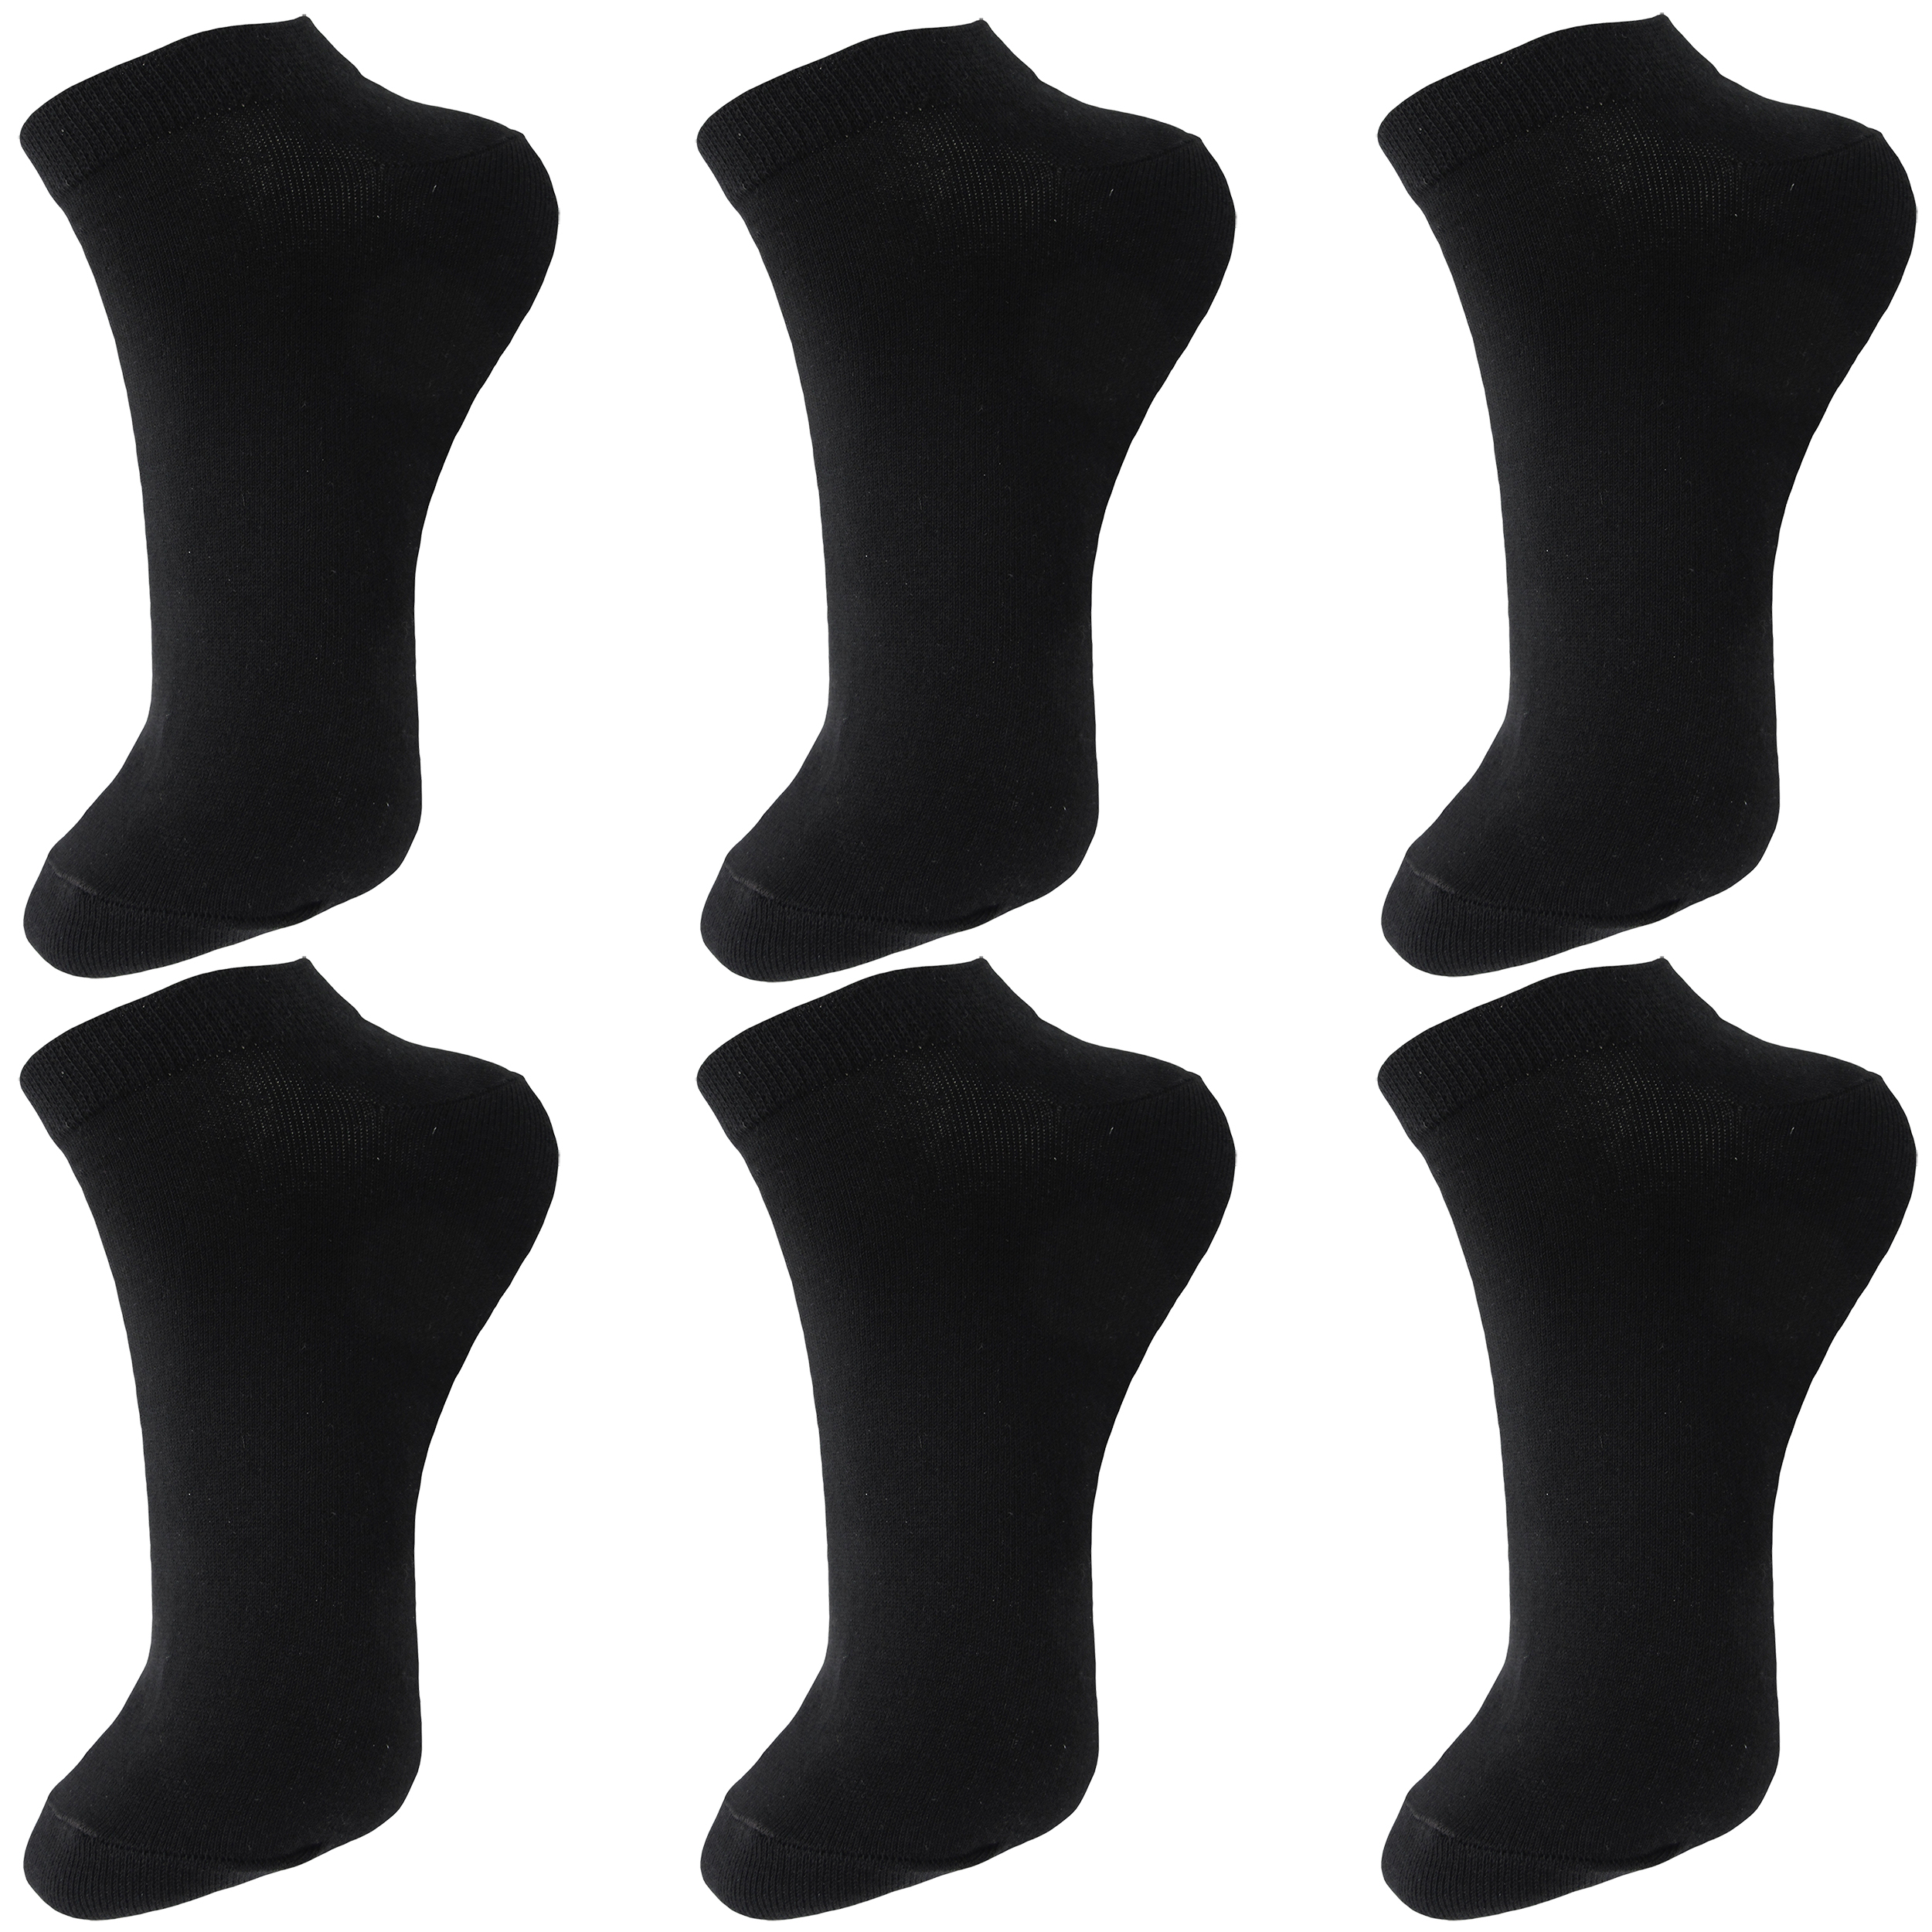 جوراب ساق کوتاه مردانه ادیب مدل کلاسیک کد 02001 رنگ مشکی بسته 6 عددی